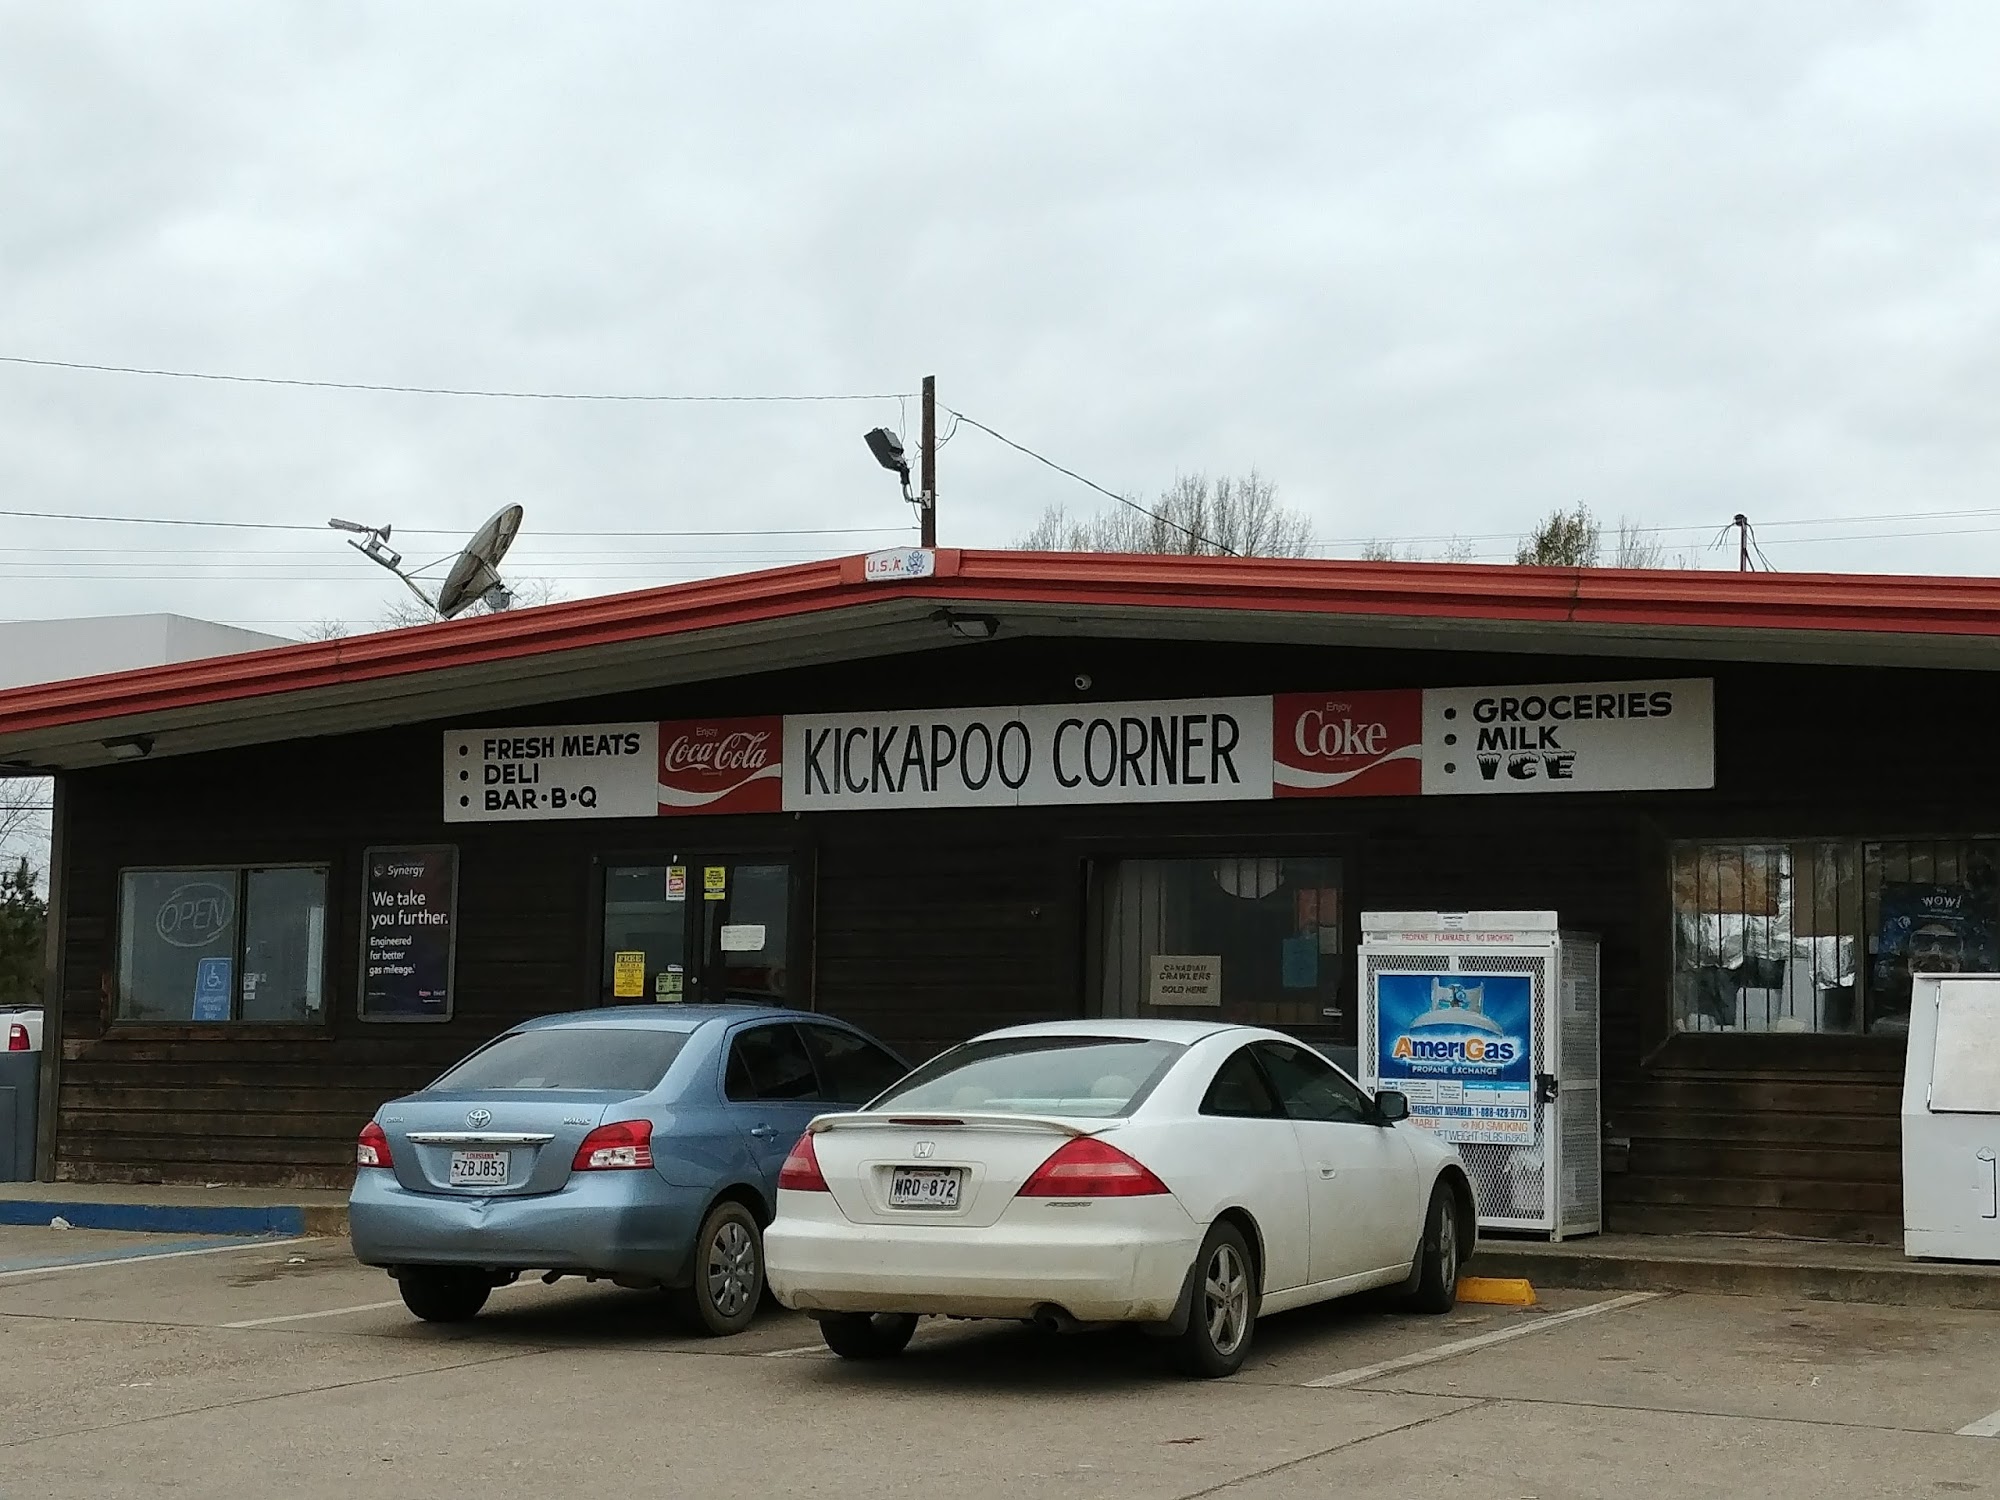 Kickapoo Corner